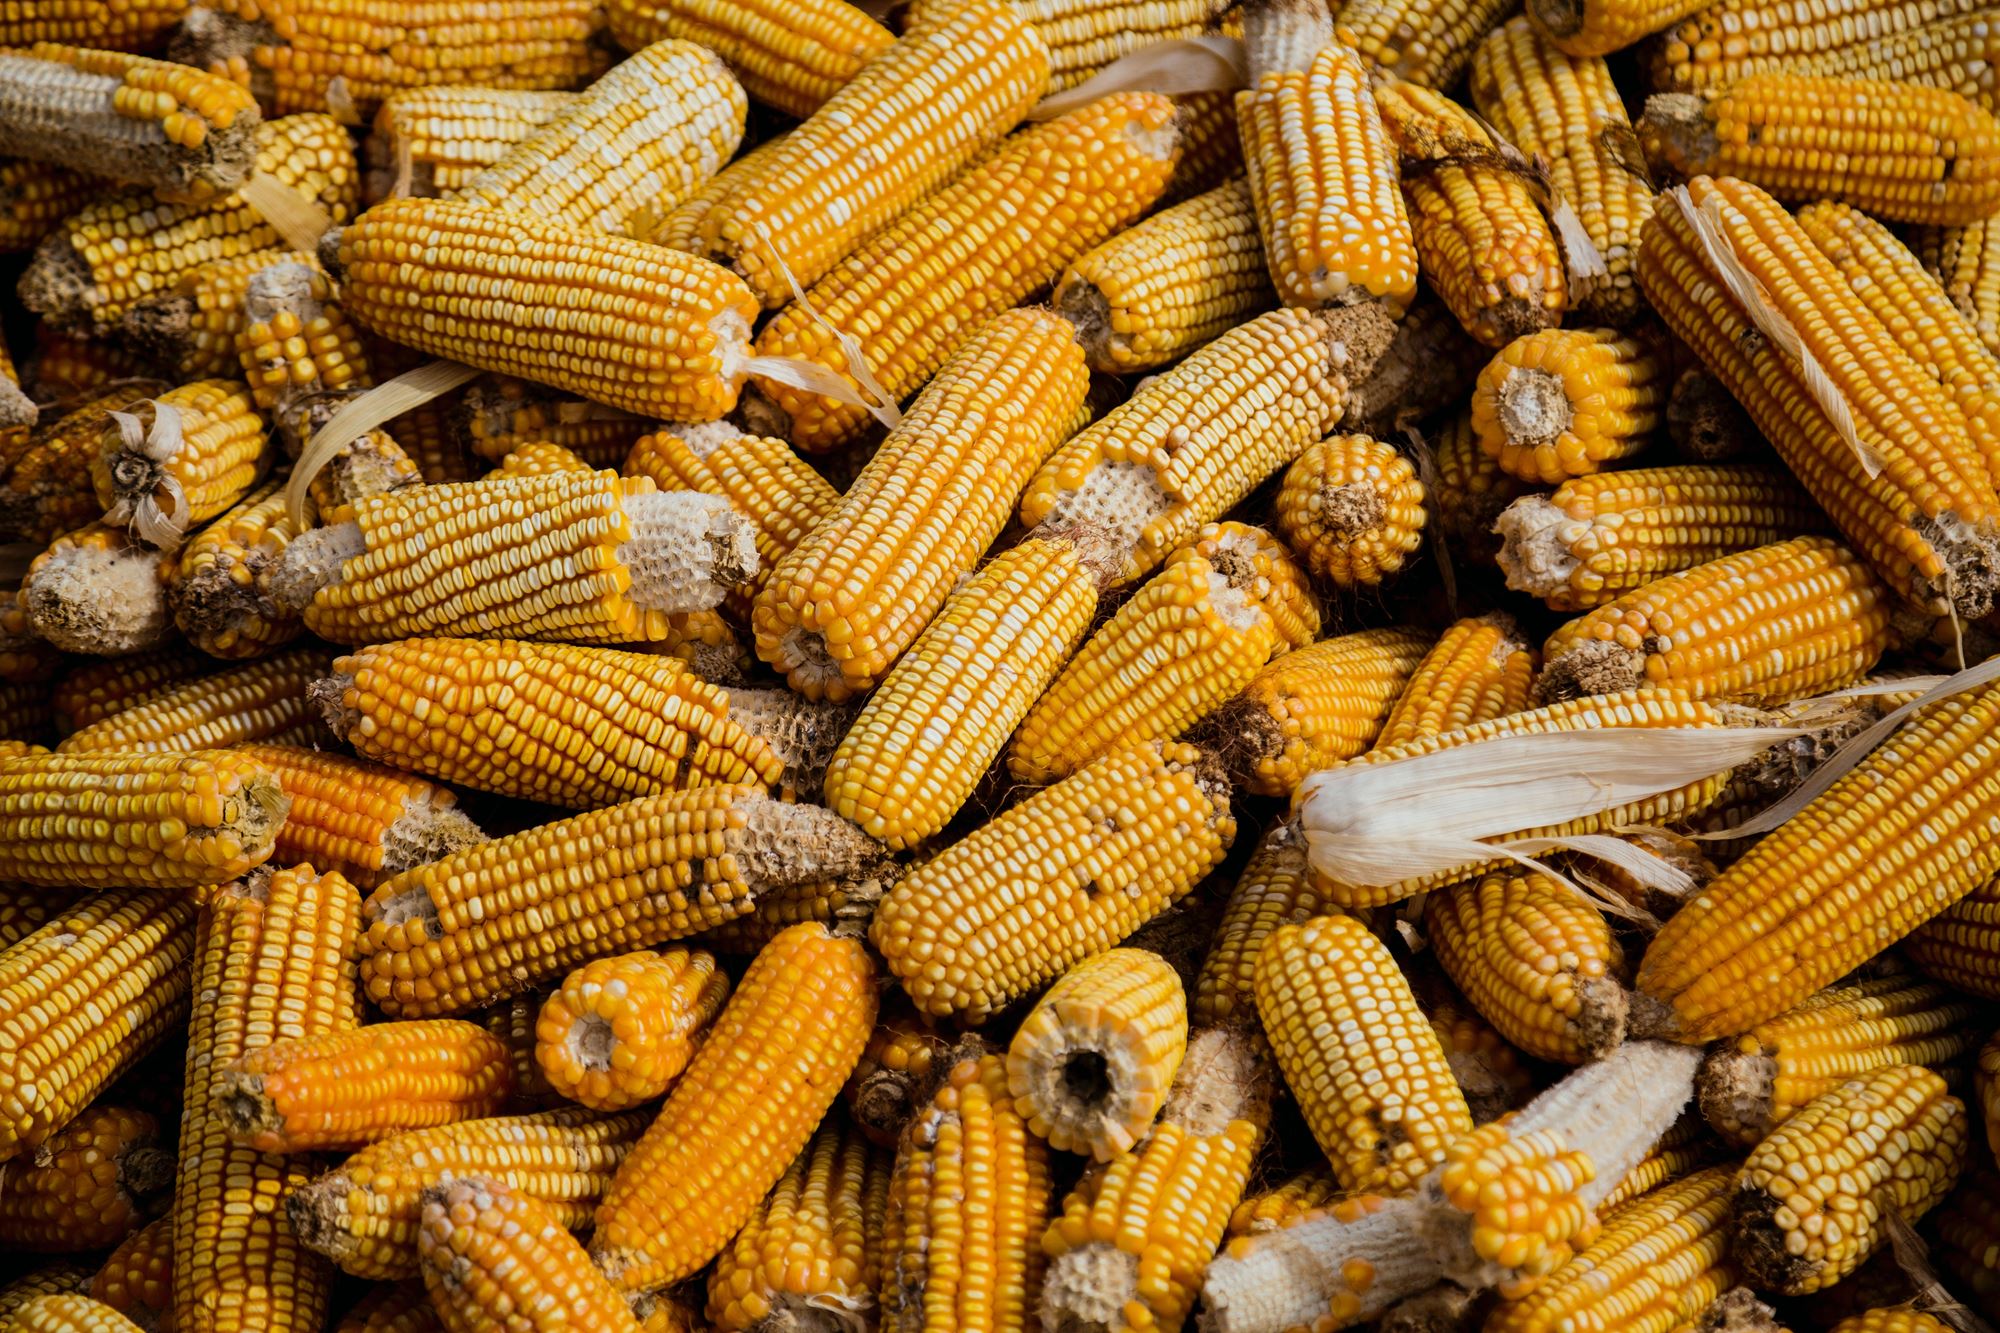 La Habra Corn Festival